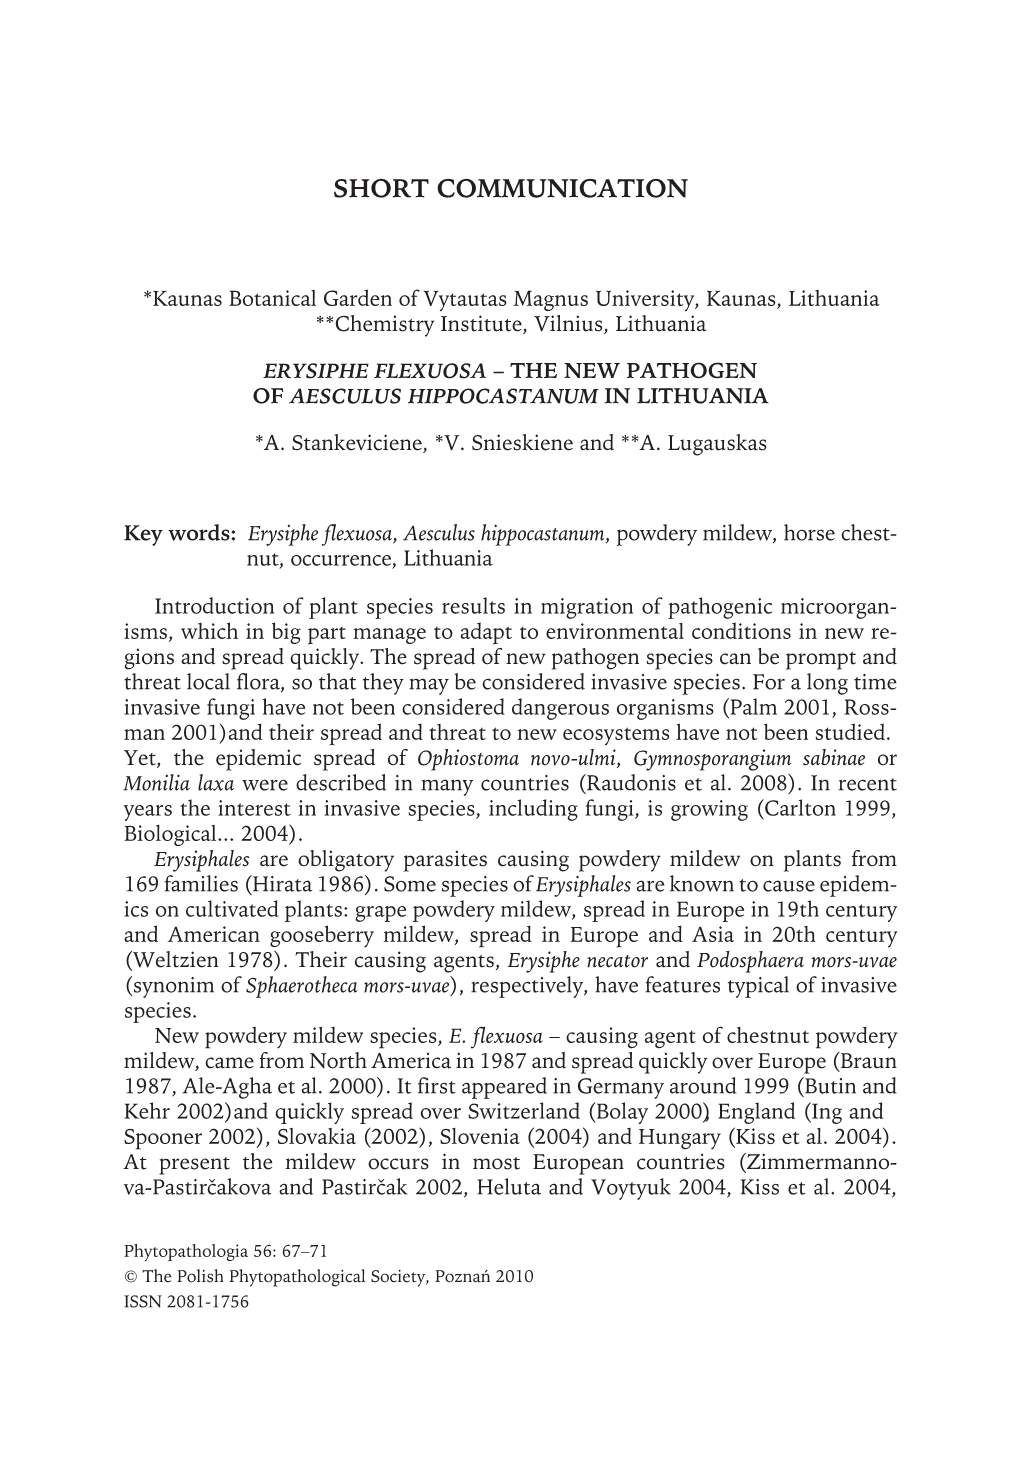 Erysiphe Flexuosa – the New Pathogen of Aesculus Hippocastanum in Lithuania